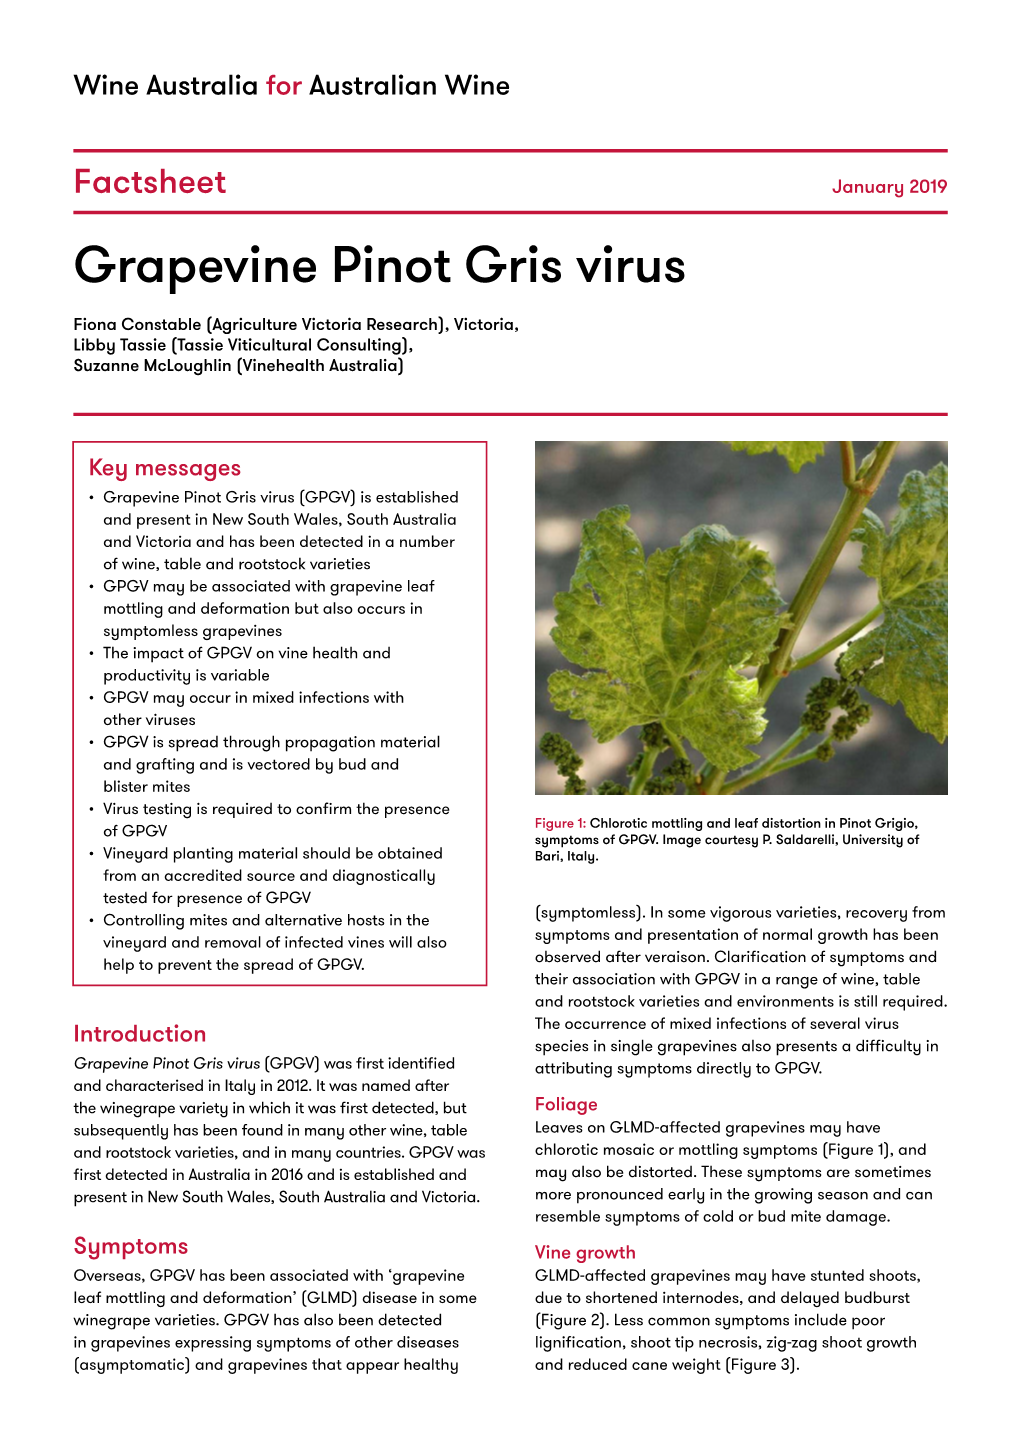 Grapevine Pinot Gris Virus